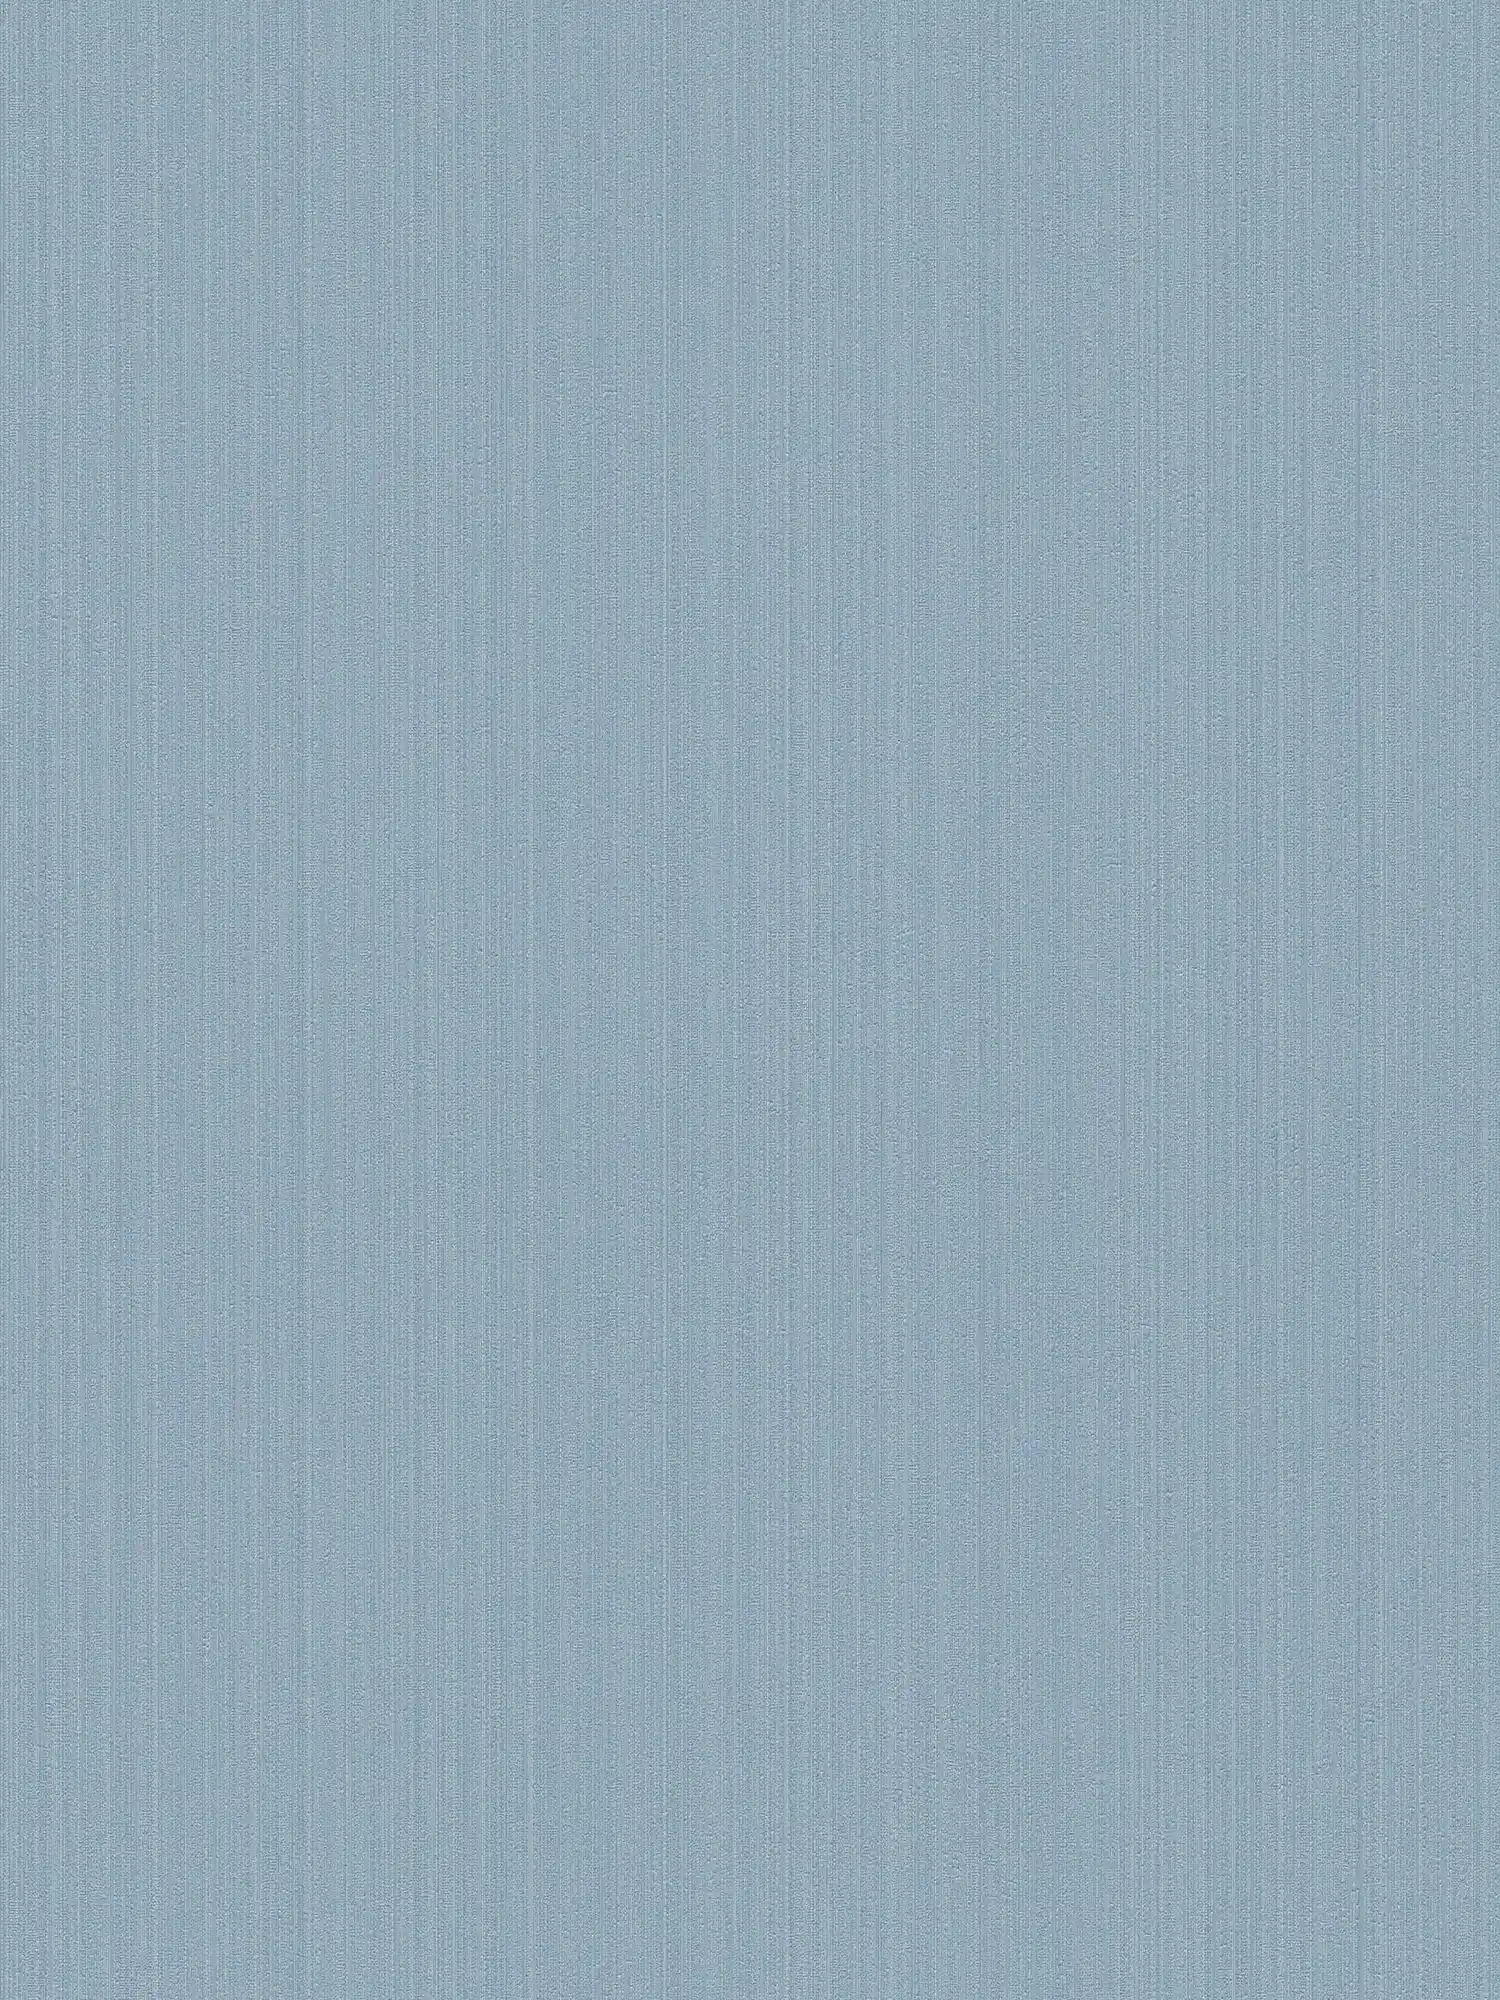 Carta da parati blu in tessuto non tessuto tinta unita, seta opaca con effetto texture
